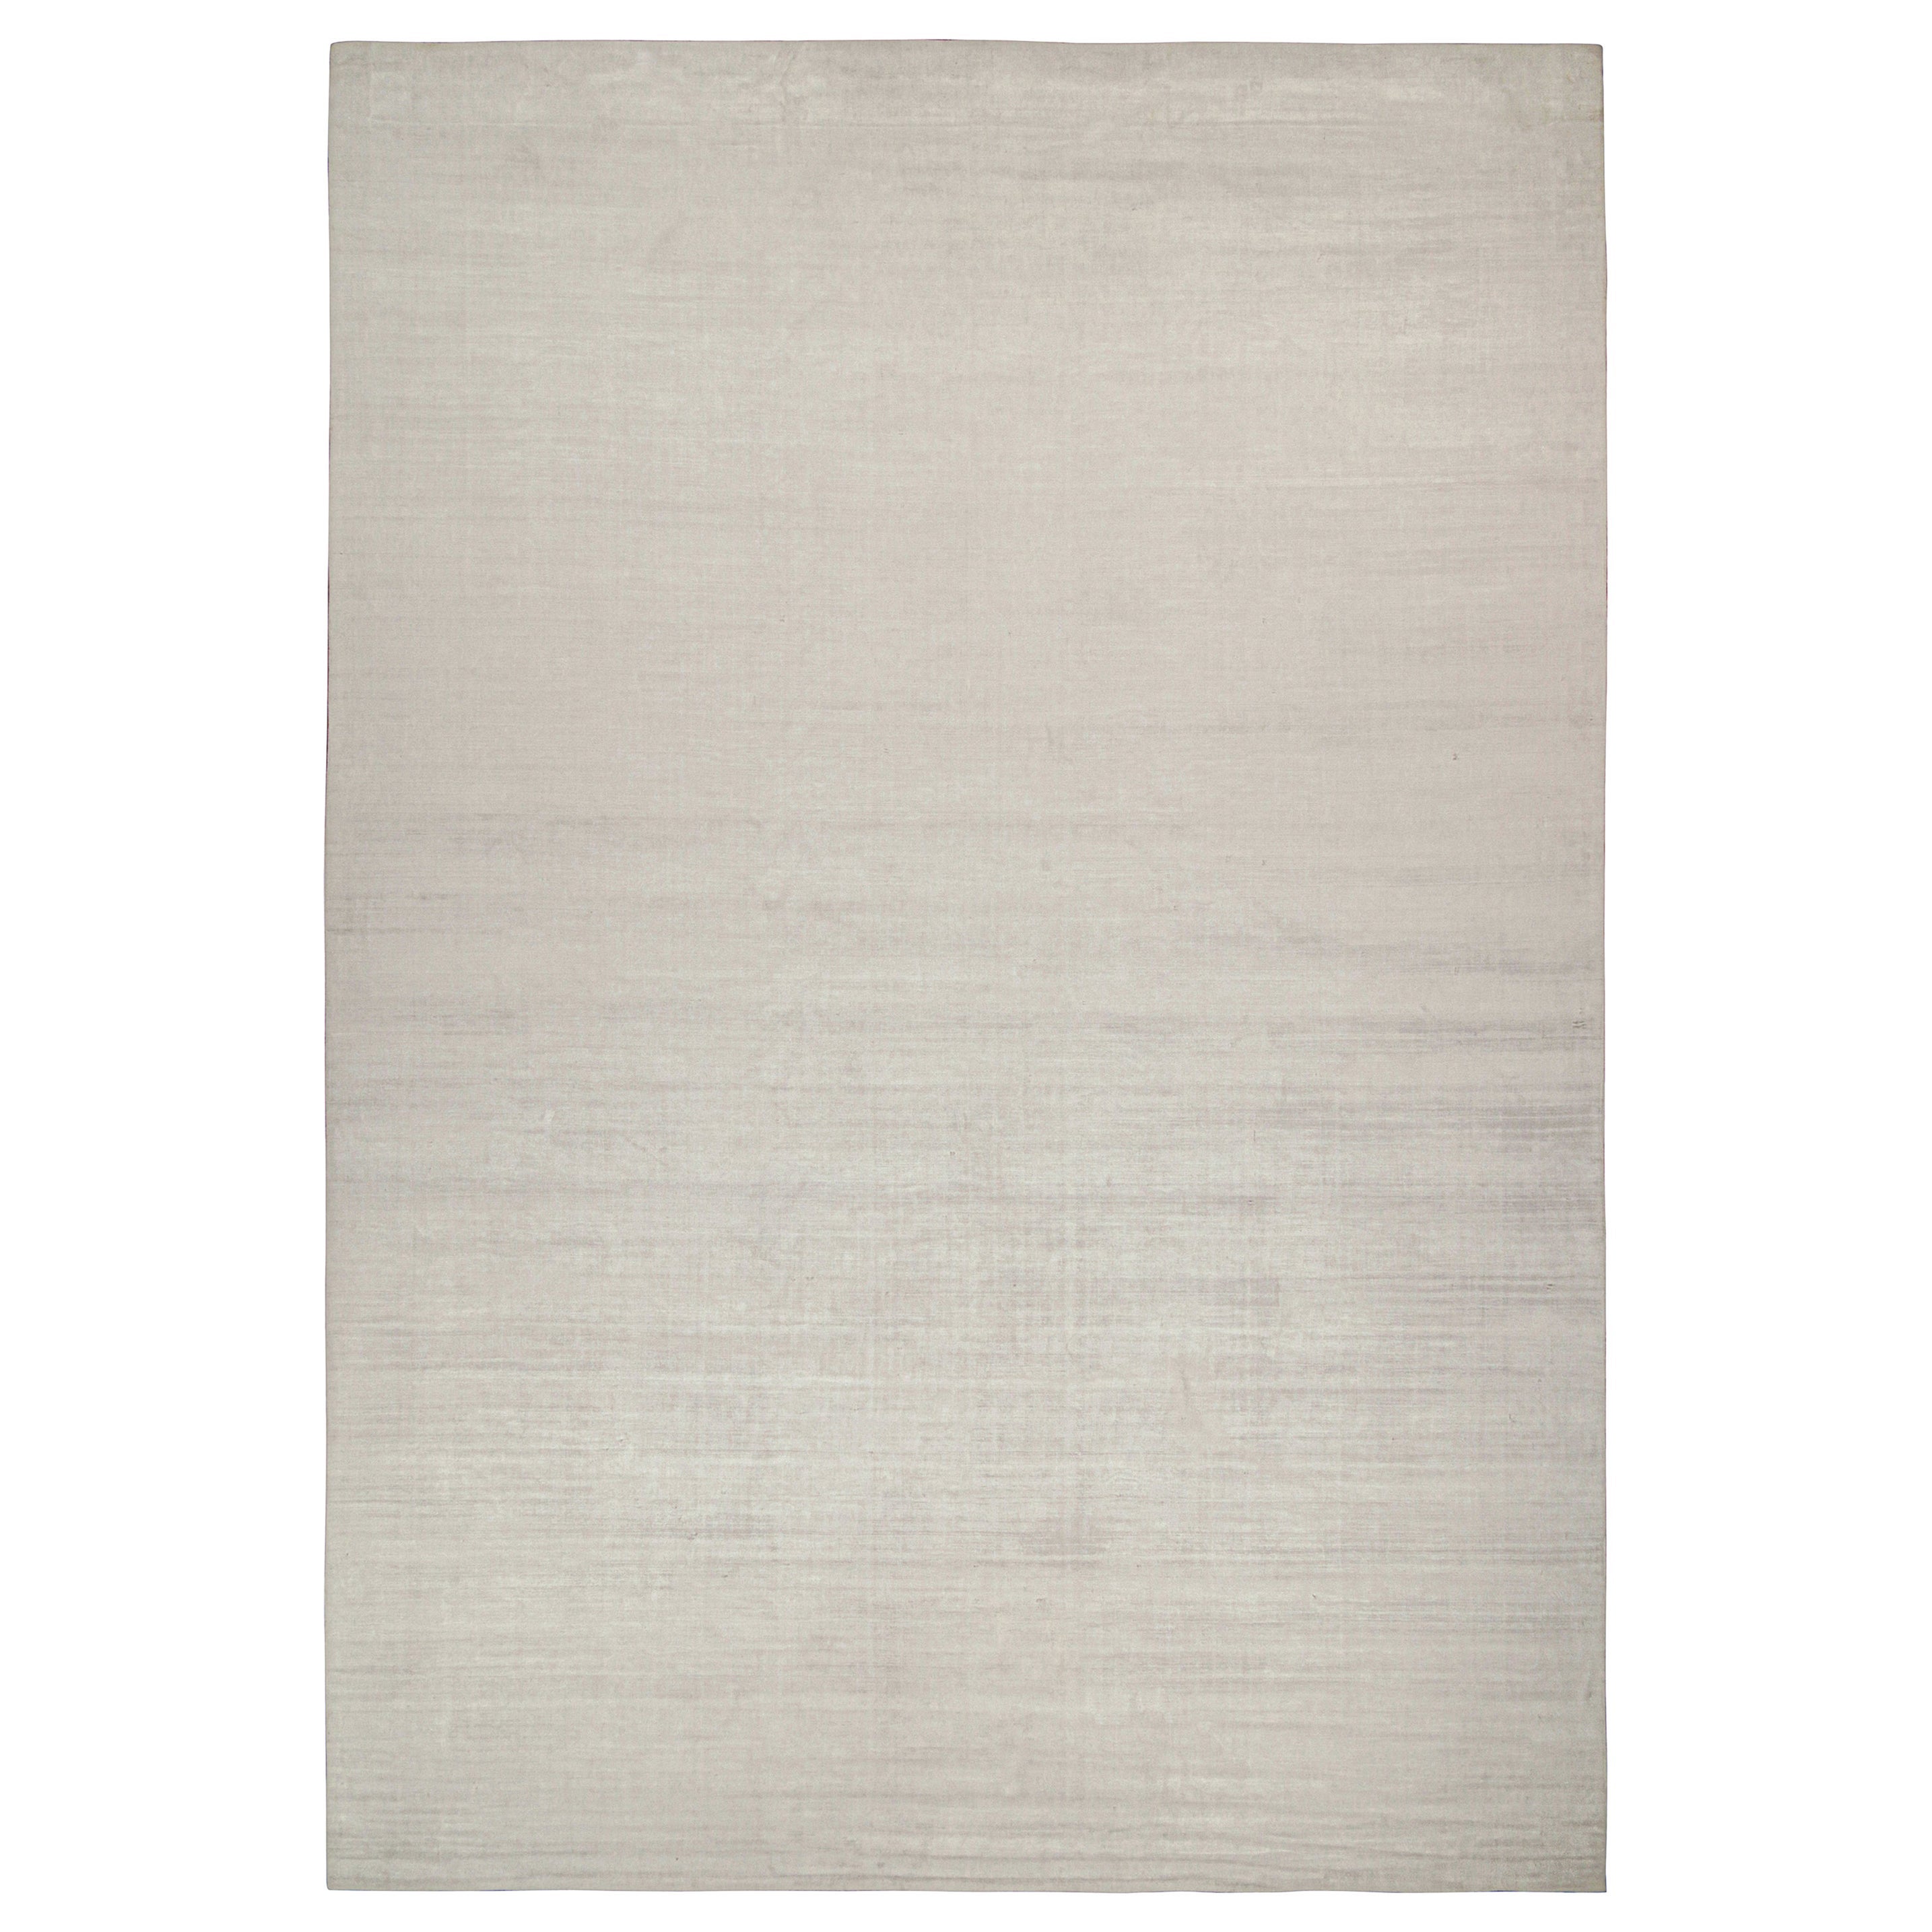 Rug & Kilim's Plain Modernity Rug in Solid Silver and Off-White Tone-on-Tone (tapis moderne uni en argent et blanc cassé)